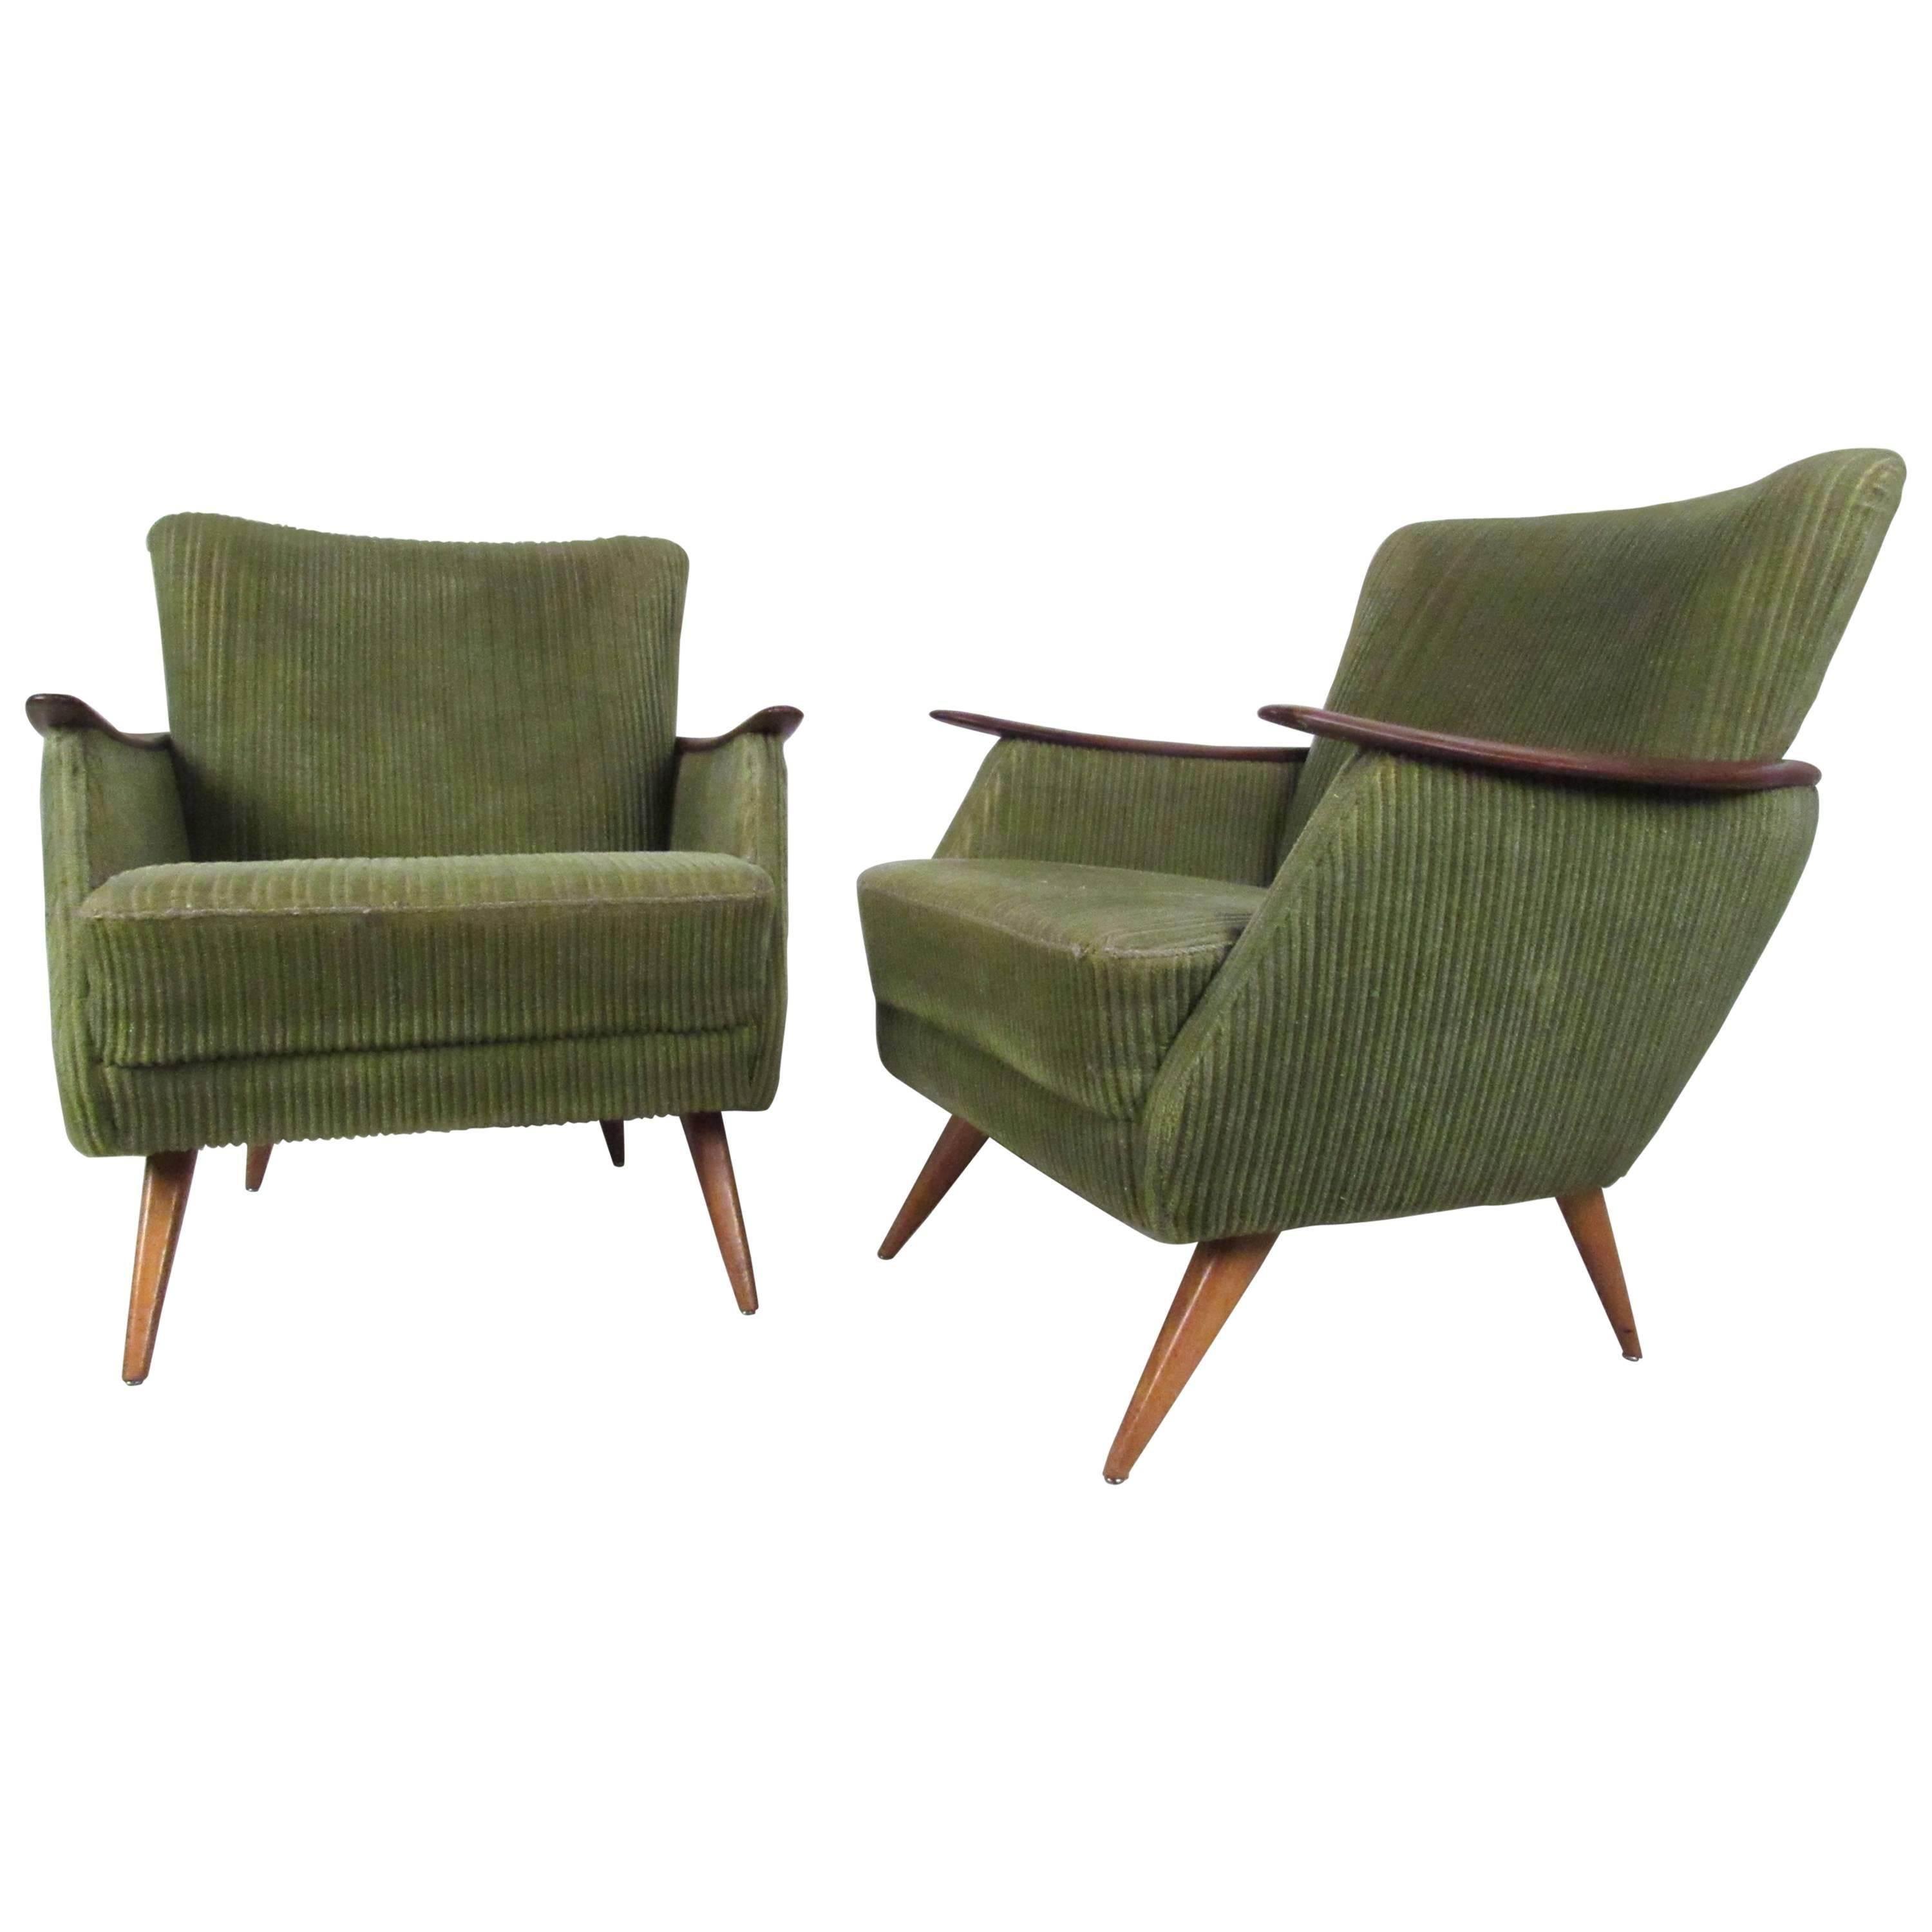 Unique Mid-Century Modern Danish Lounge Chairs